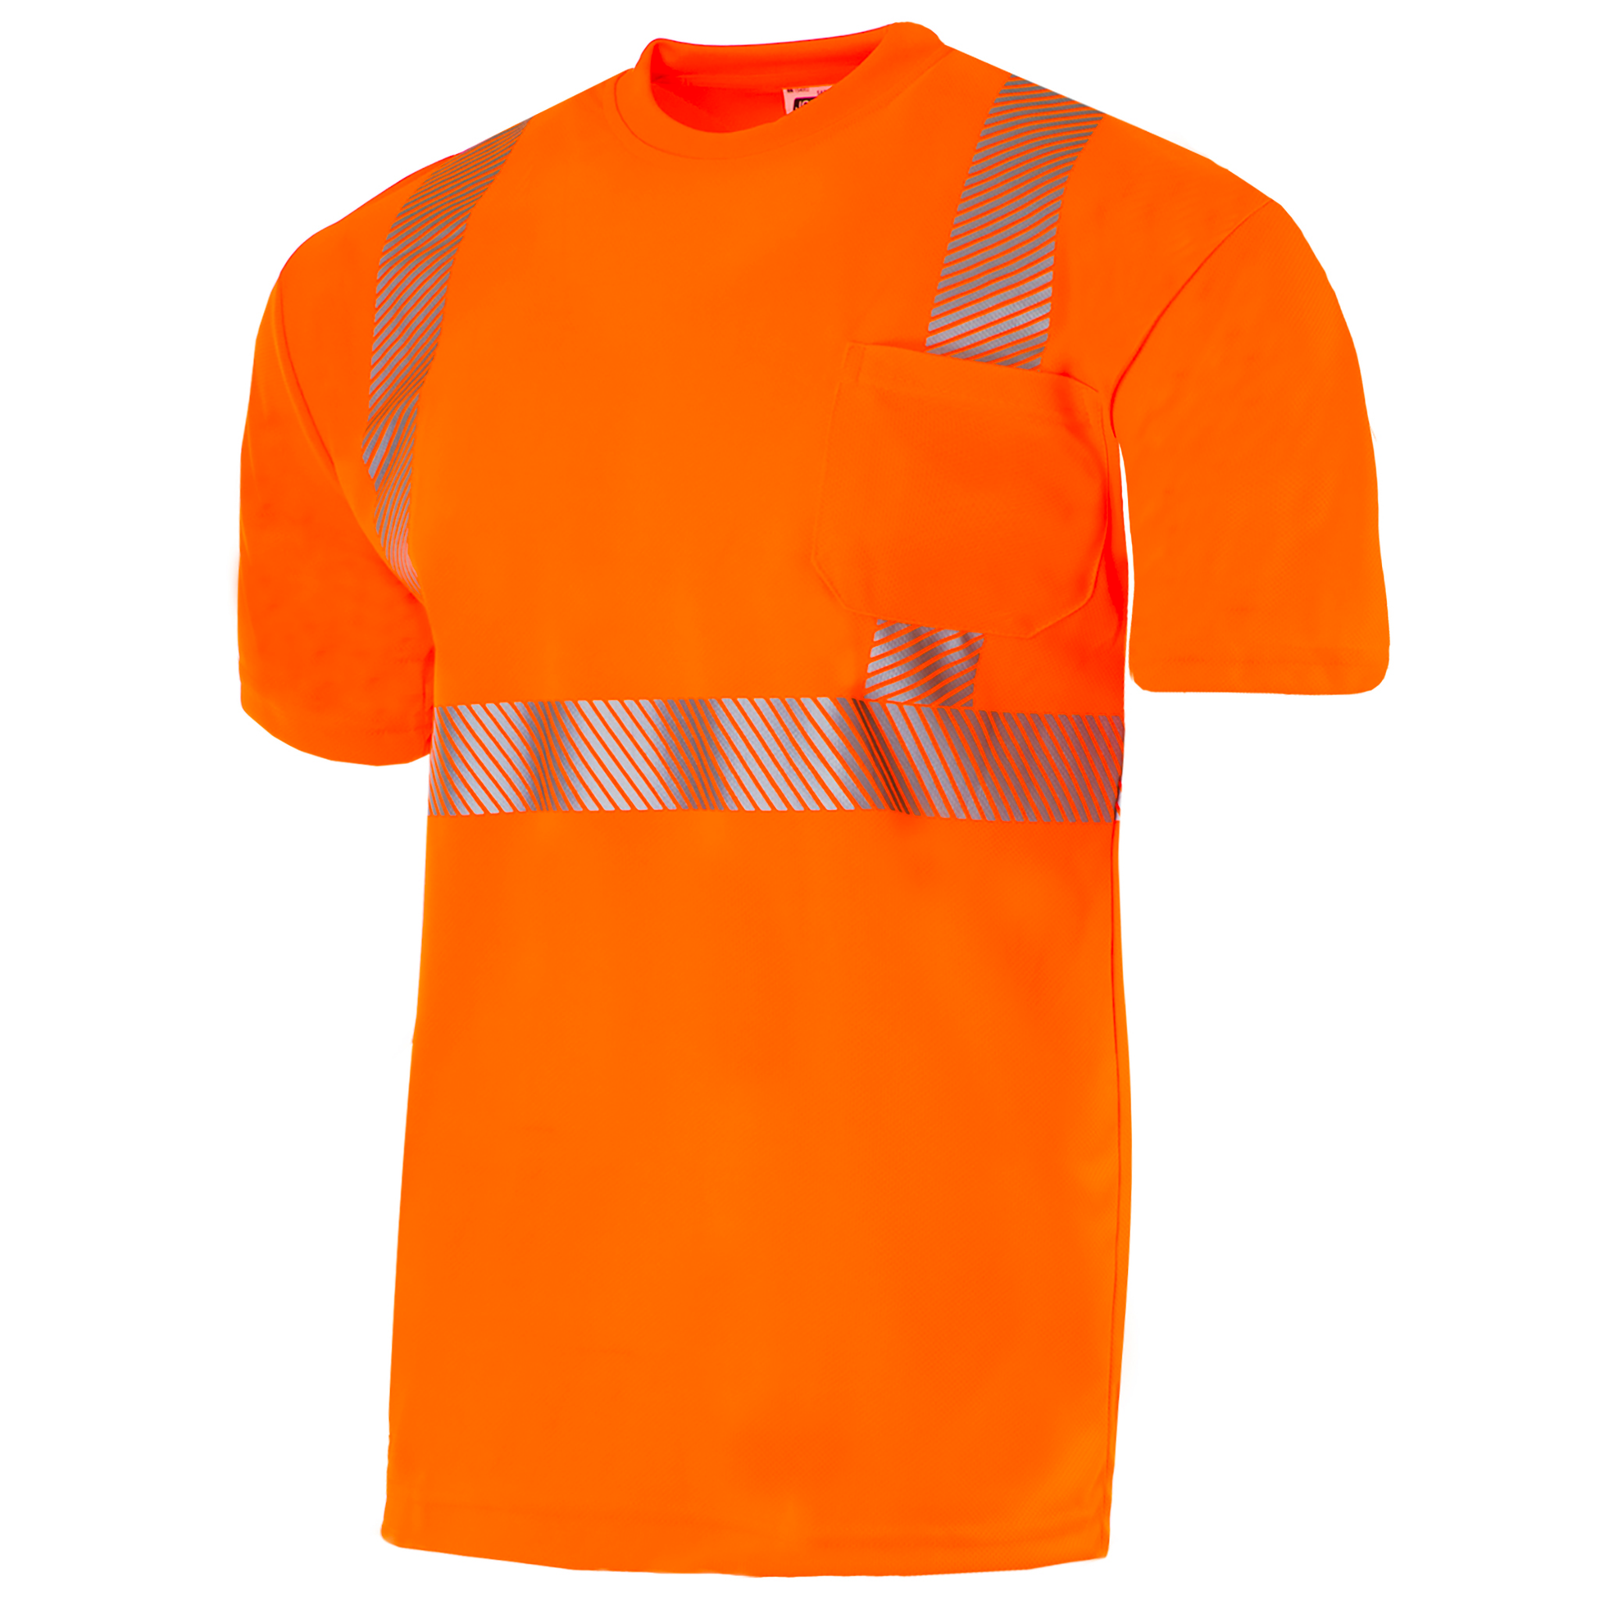 Diagonal view of the JORESTECH Hi-Vis Orange heat transfer reflective safety pocket shirt 